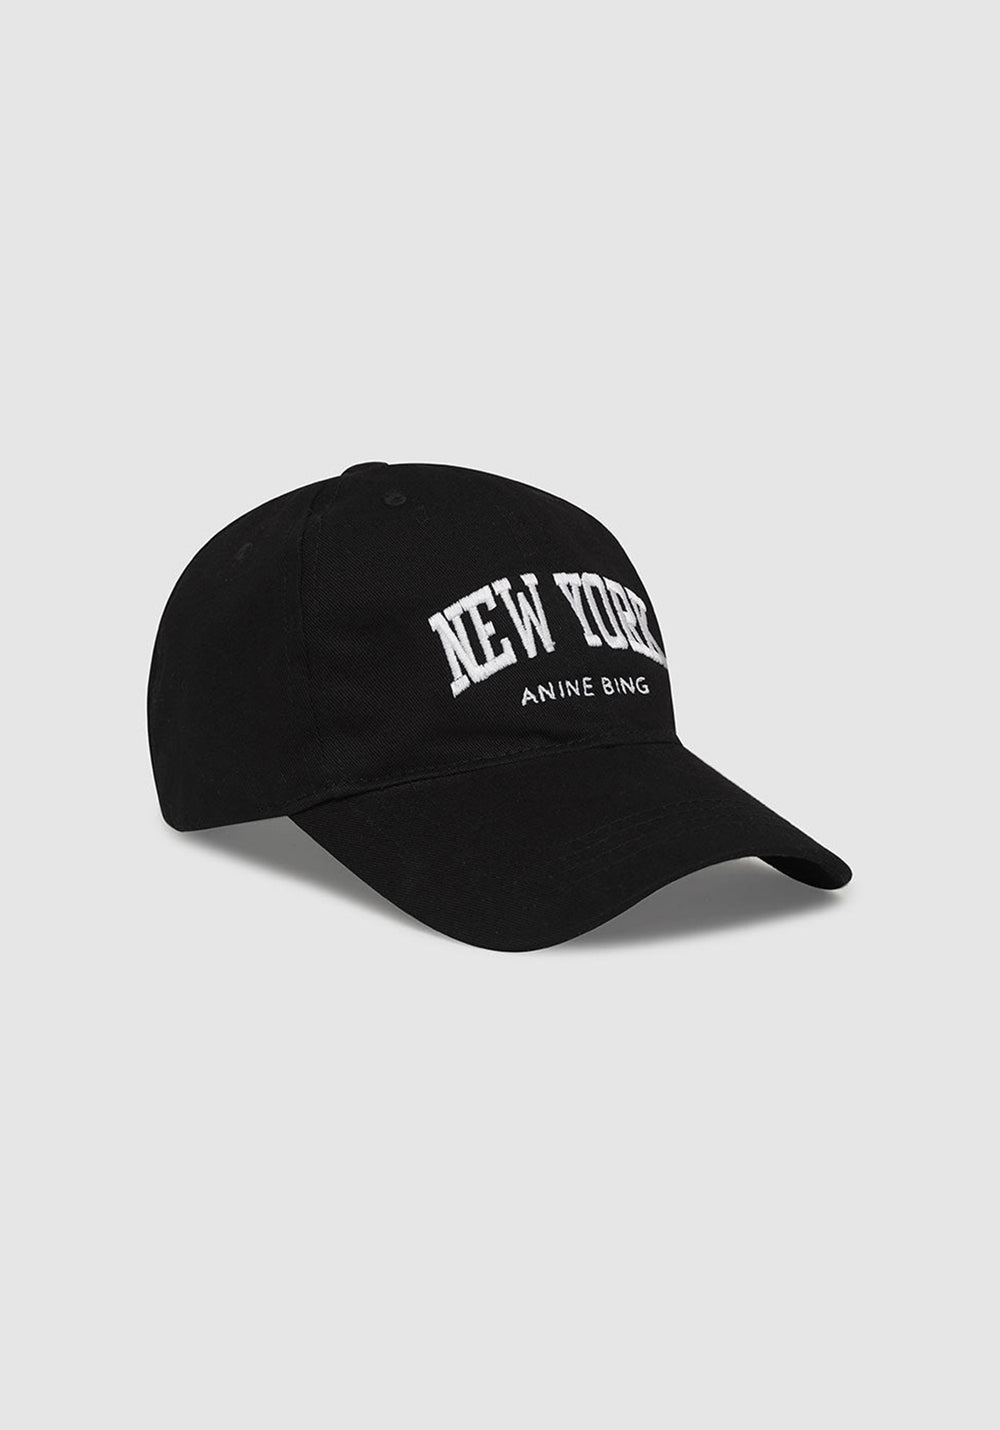 JEREMY BASEBALL CAP NEW YORK BLACK